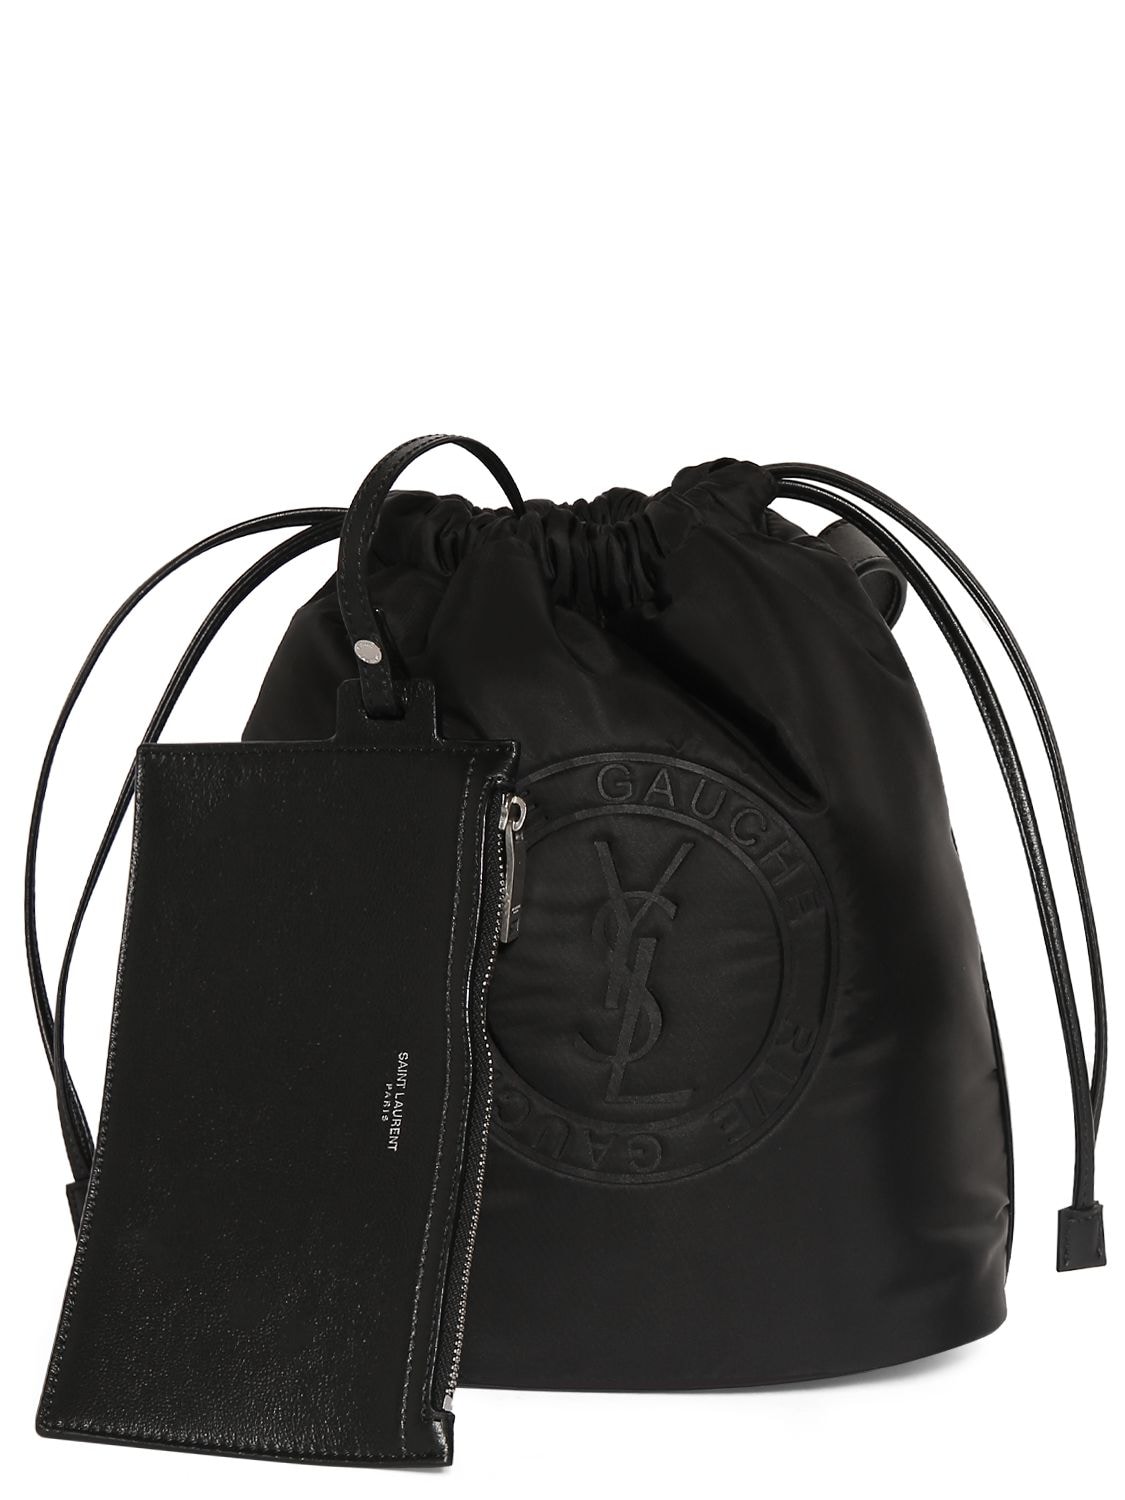 Saint Laurent Rive Gauche Laced Leather Bucket Bag In Black